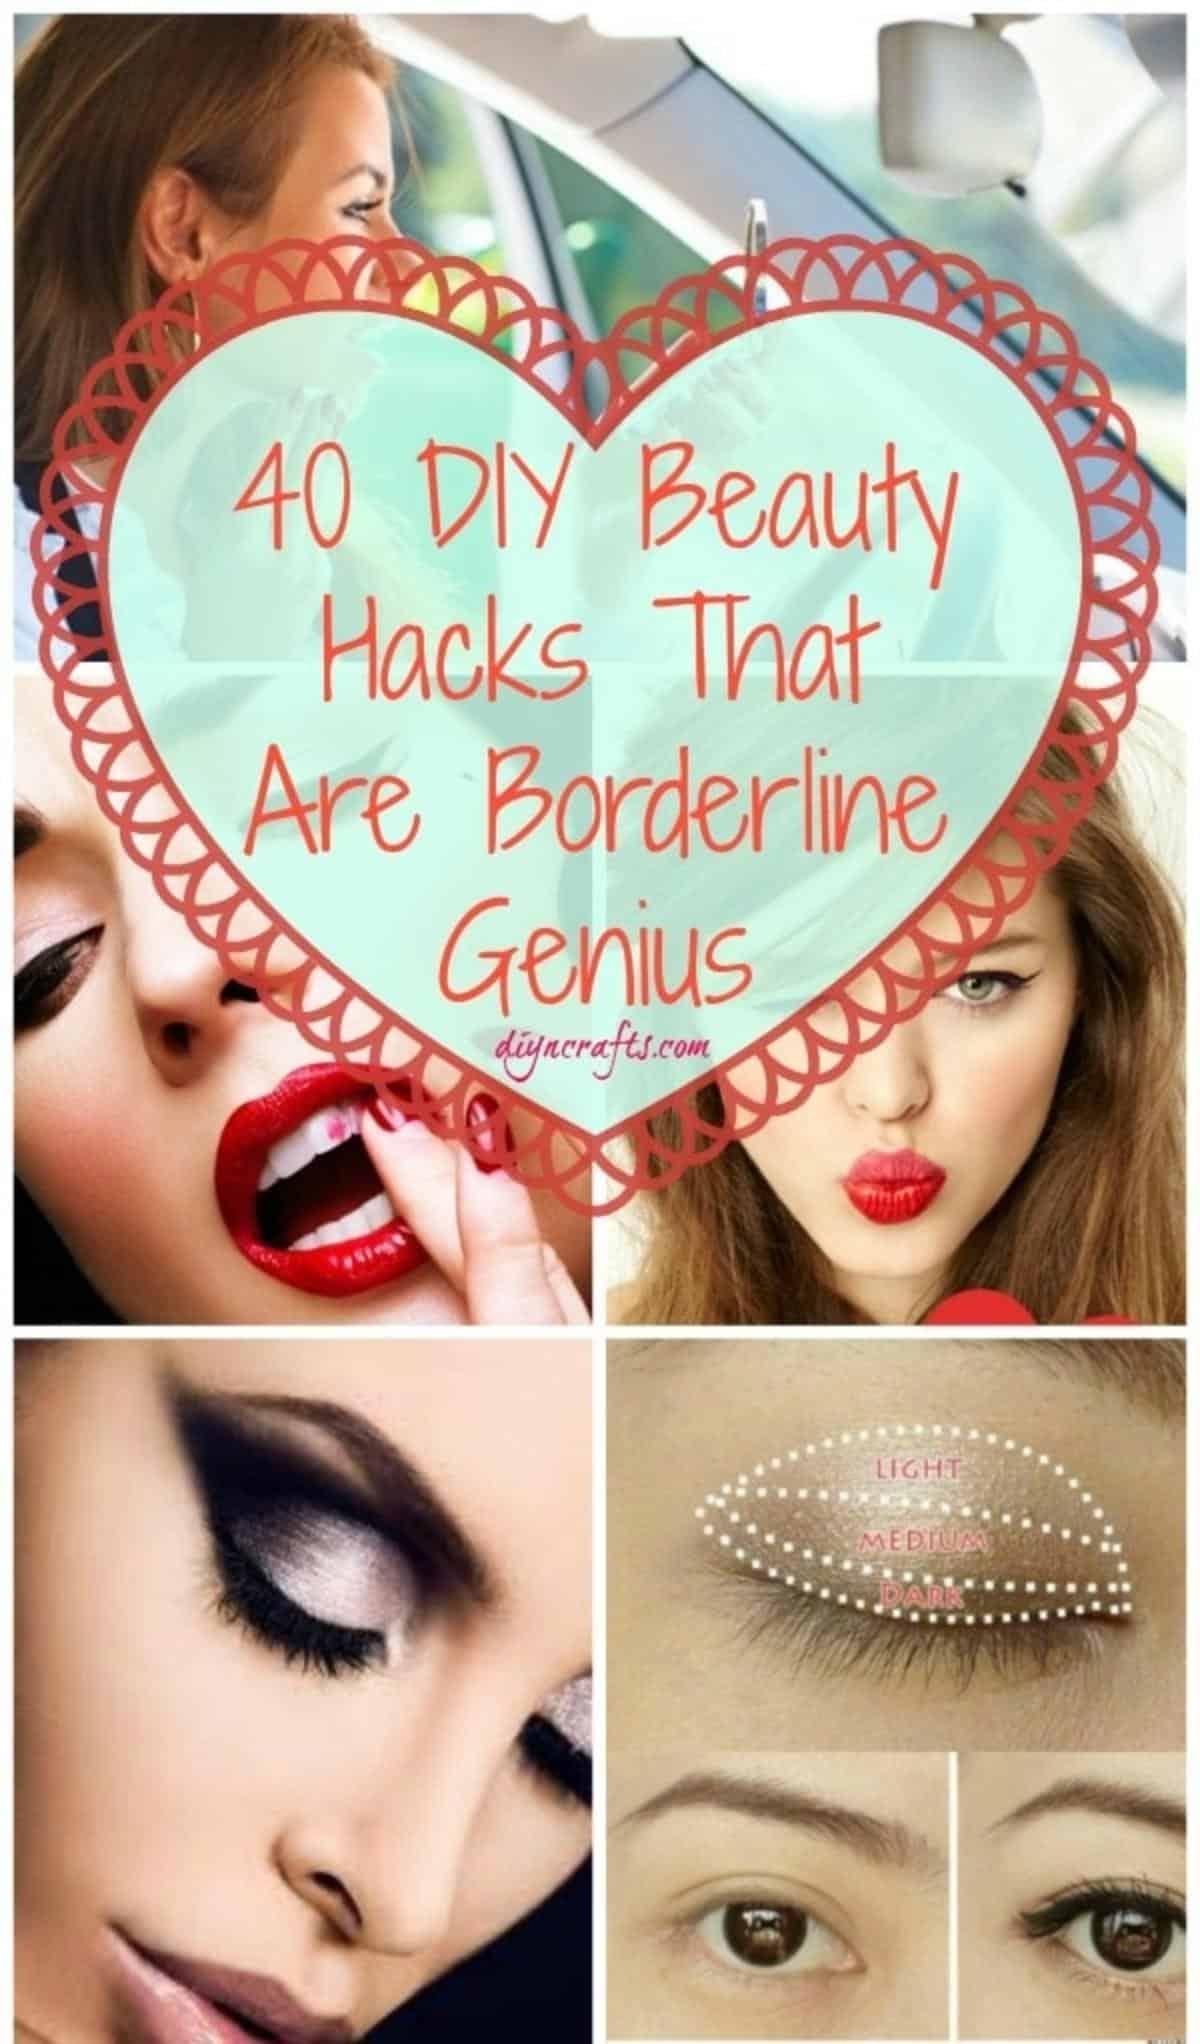 40 DIY Beauty Hacks That Are Borderline Genius collage.